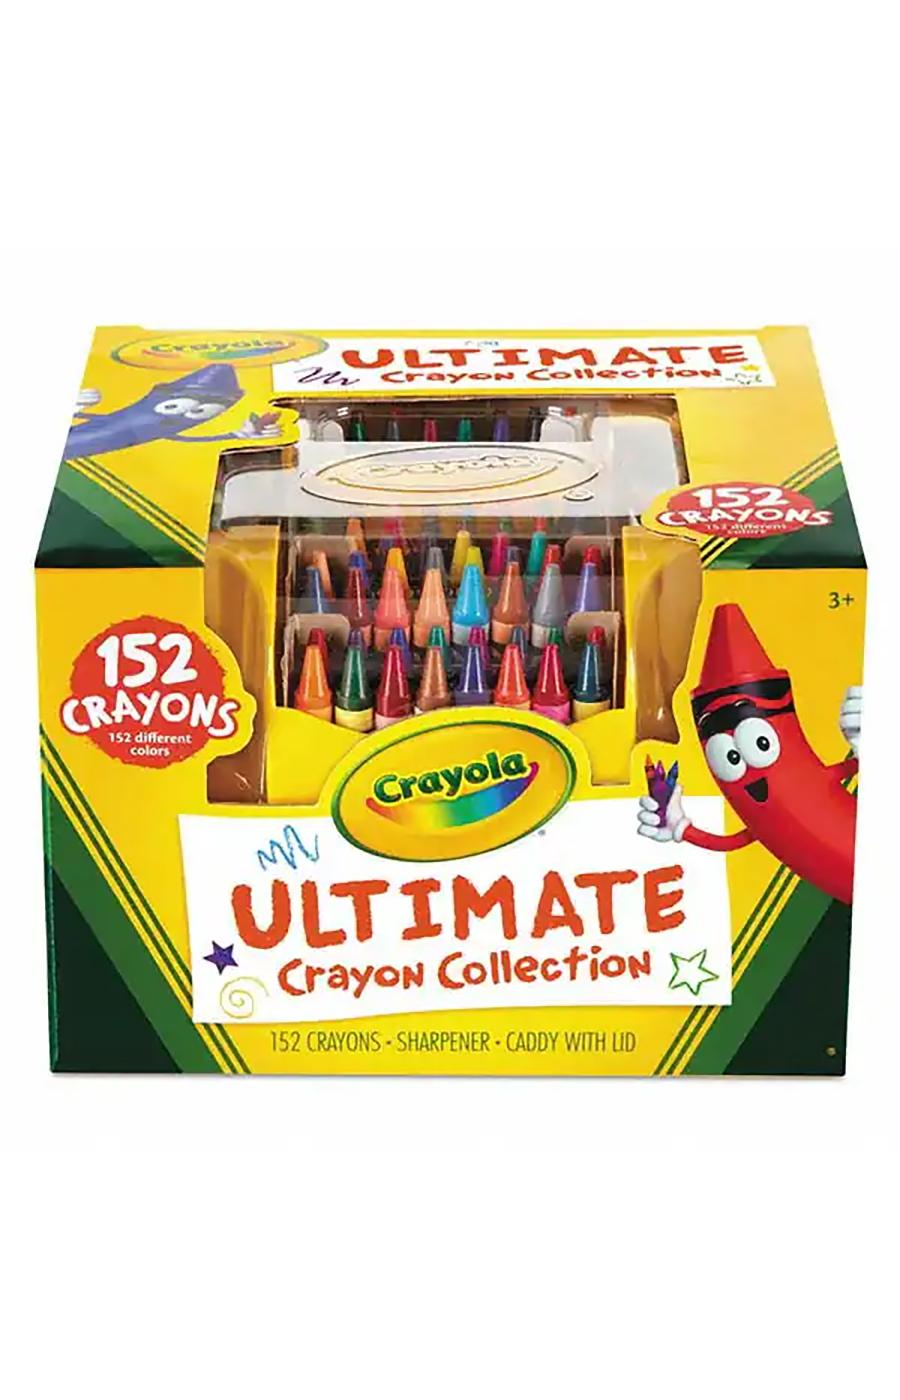 Crayola Ultimate Crayon Collection; image 1 of 2